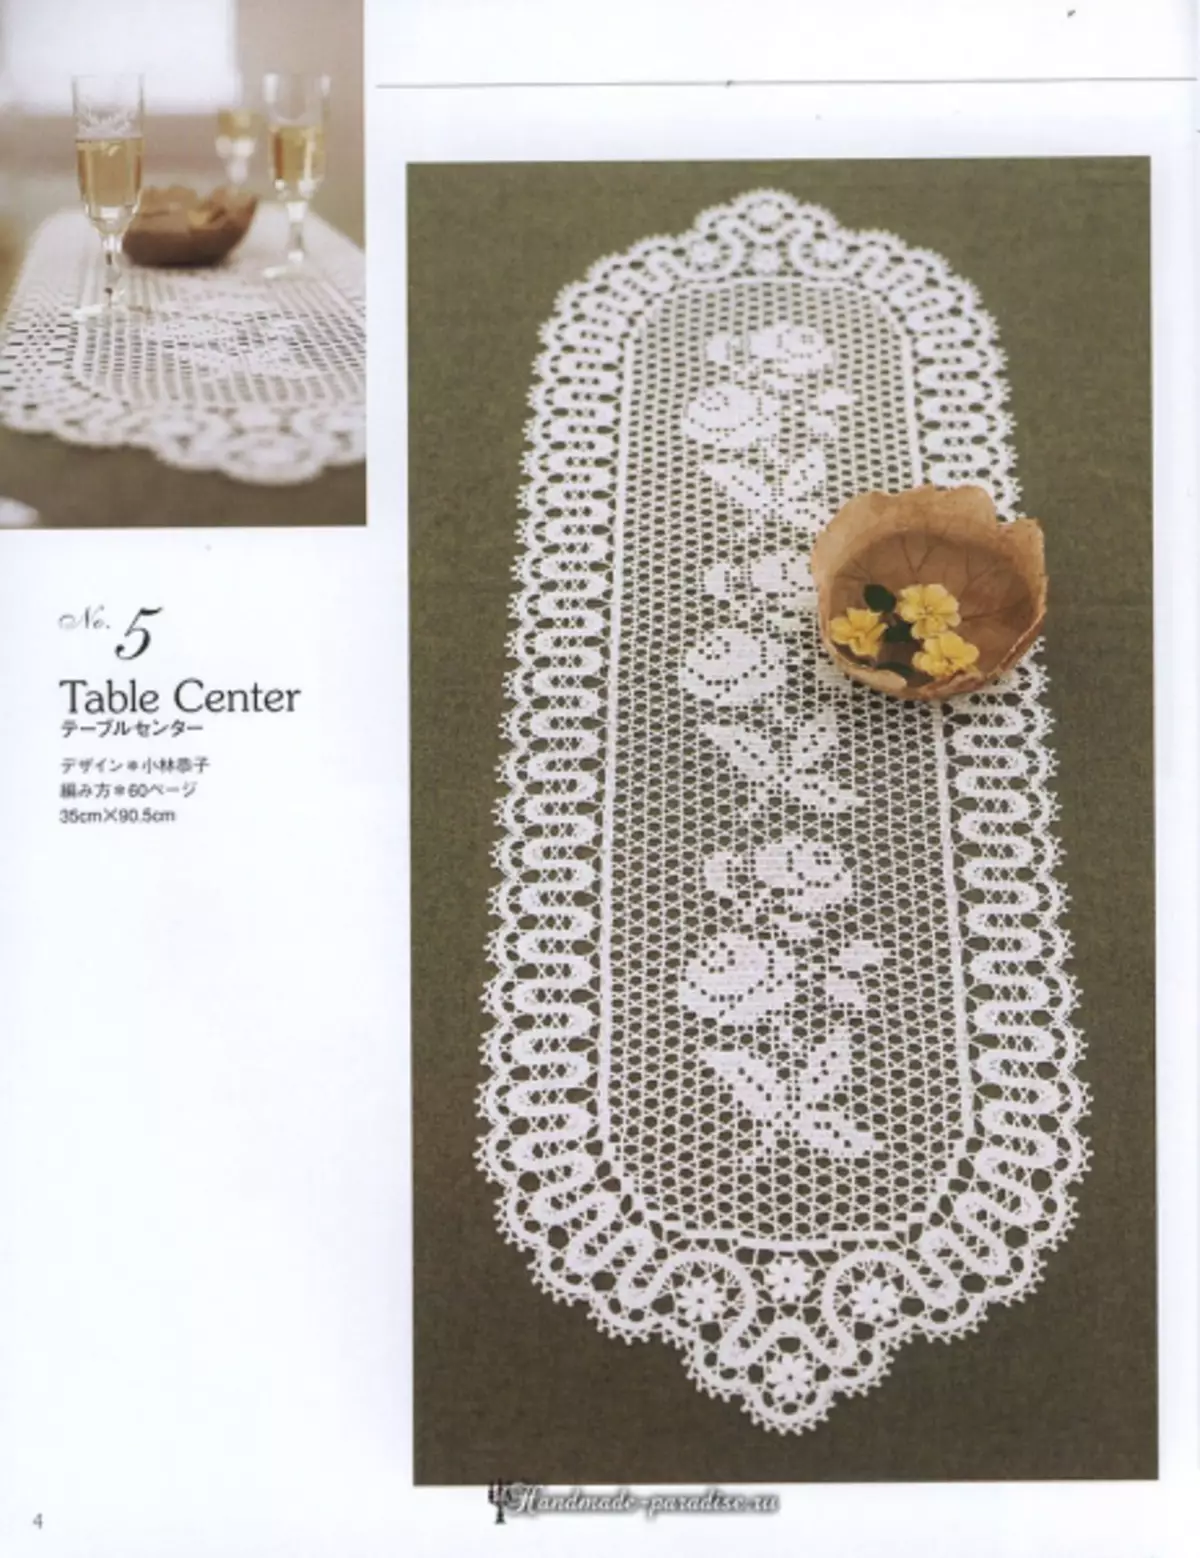 Elegante Crochet Lace 2019 Magazine - Guardanapos e Tablecloths de Crochet